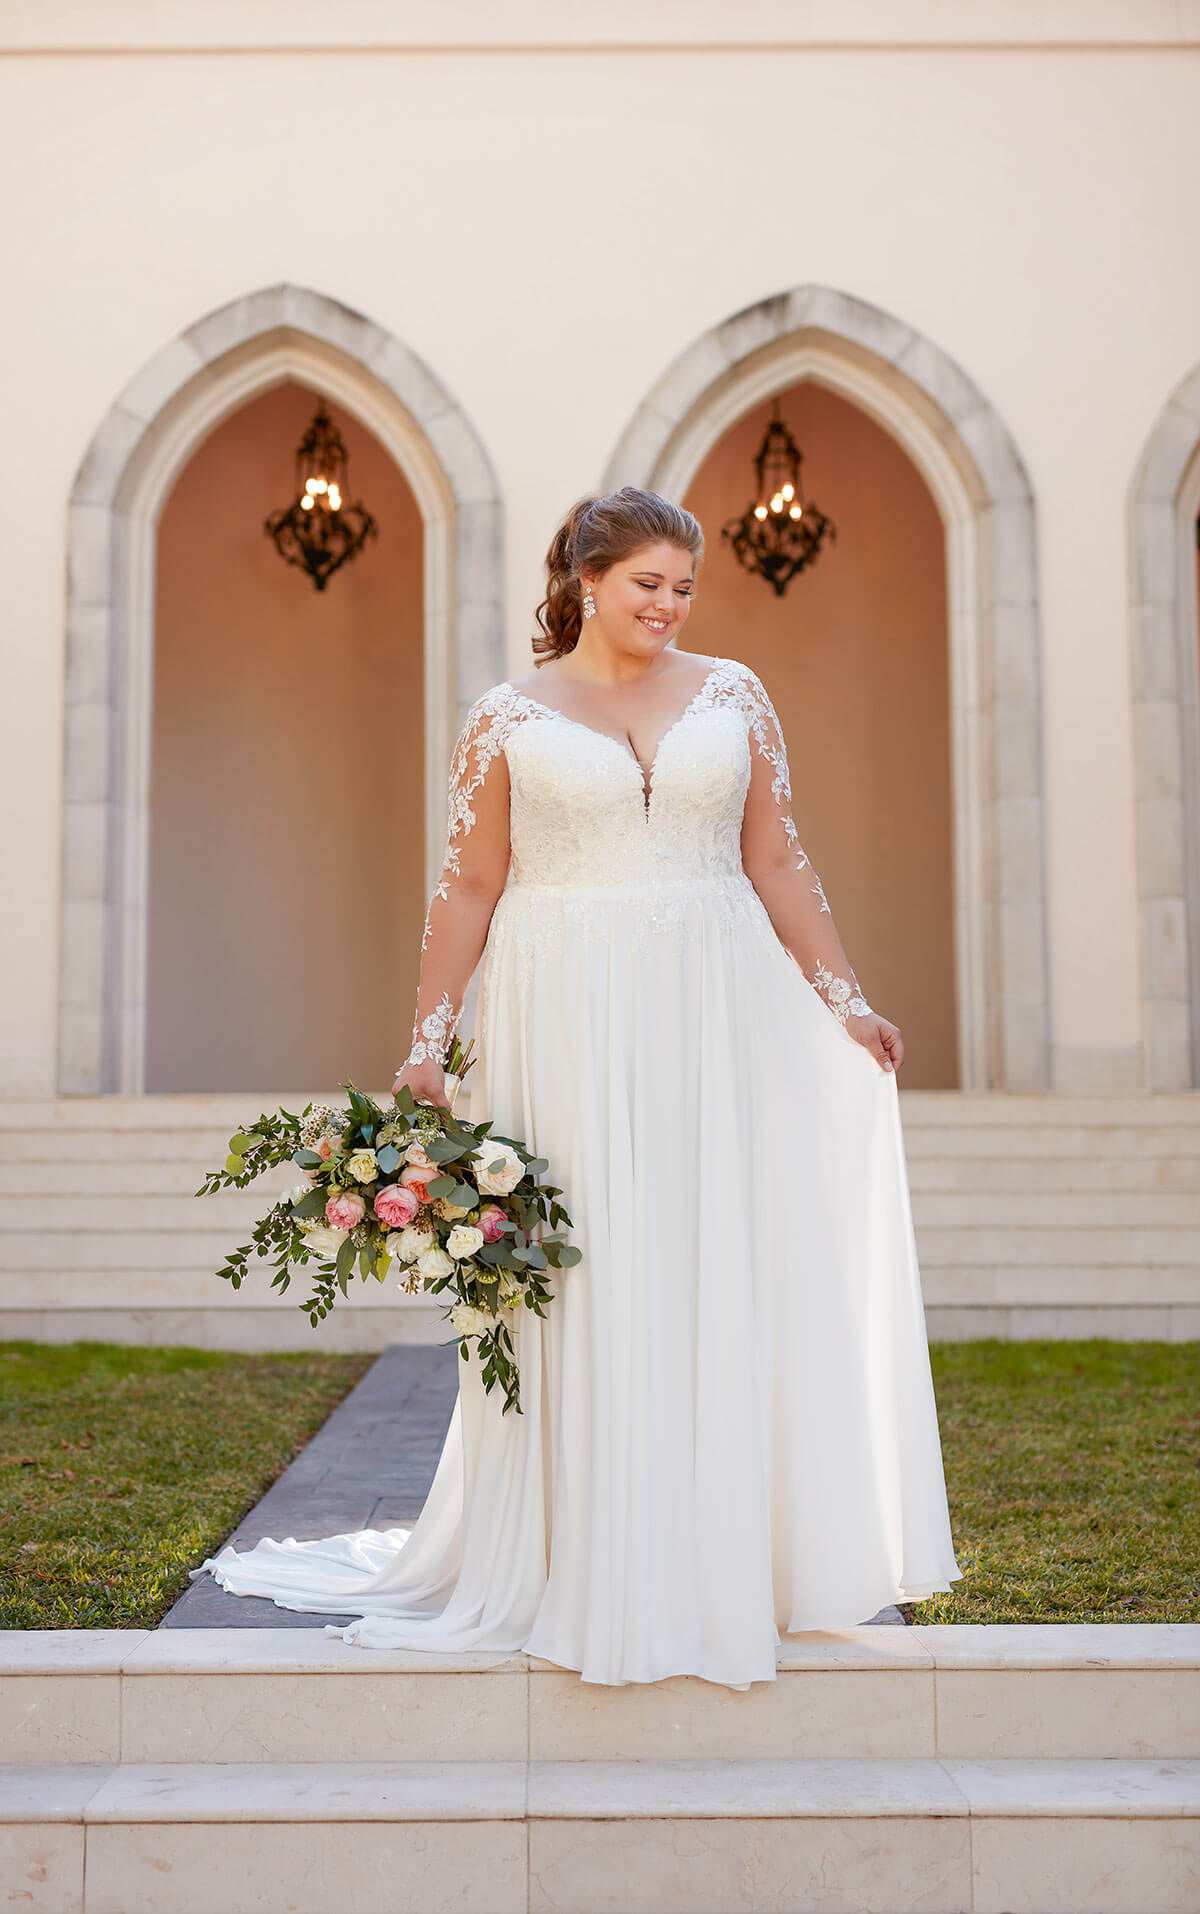 Plus-Size Wedding Dresses - Michigan Bridal Store - The White Dress